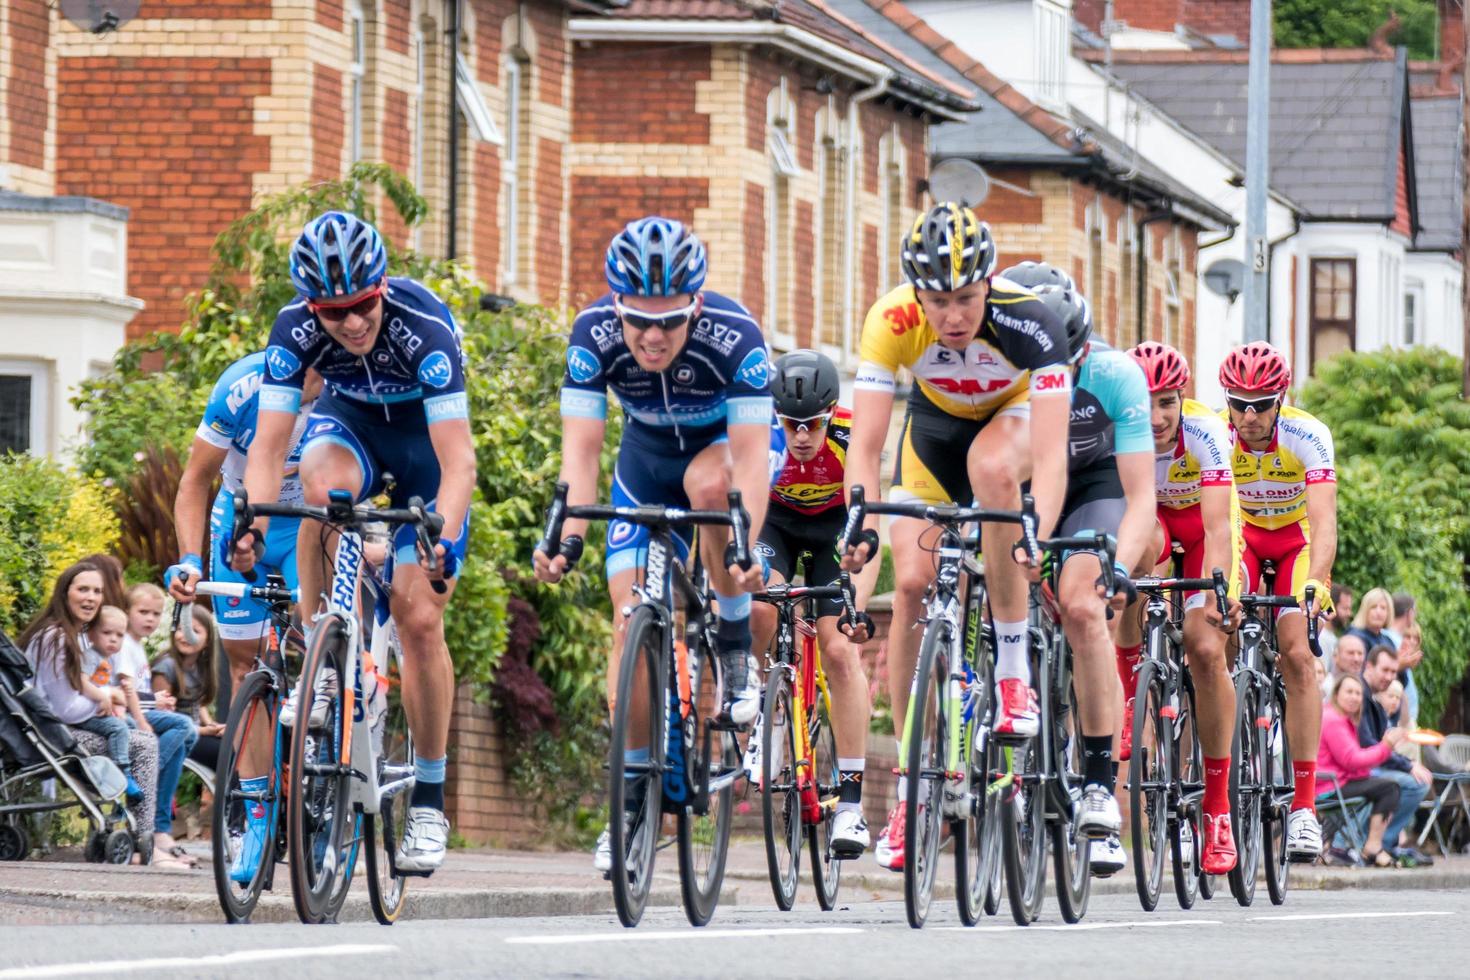 cardiff, gales, reino unido, 2015. ciclistas no evento de ciclismo velothon foto